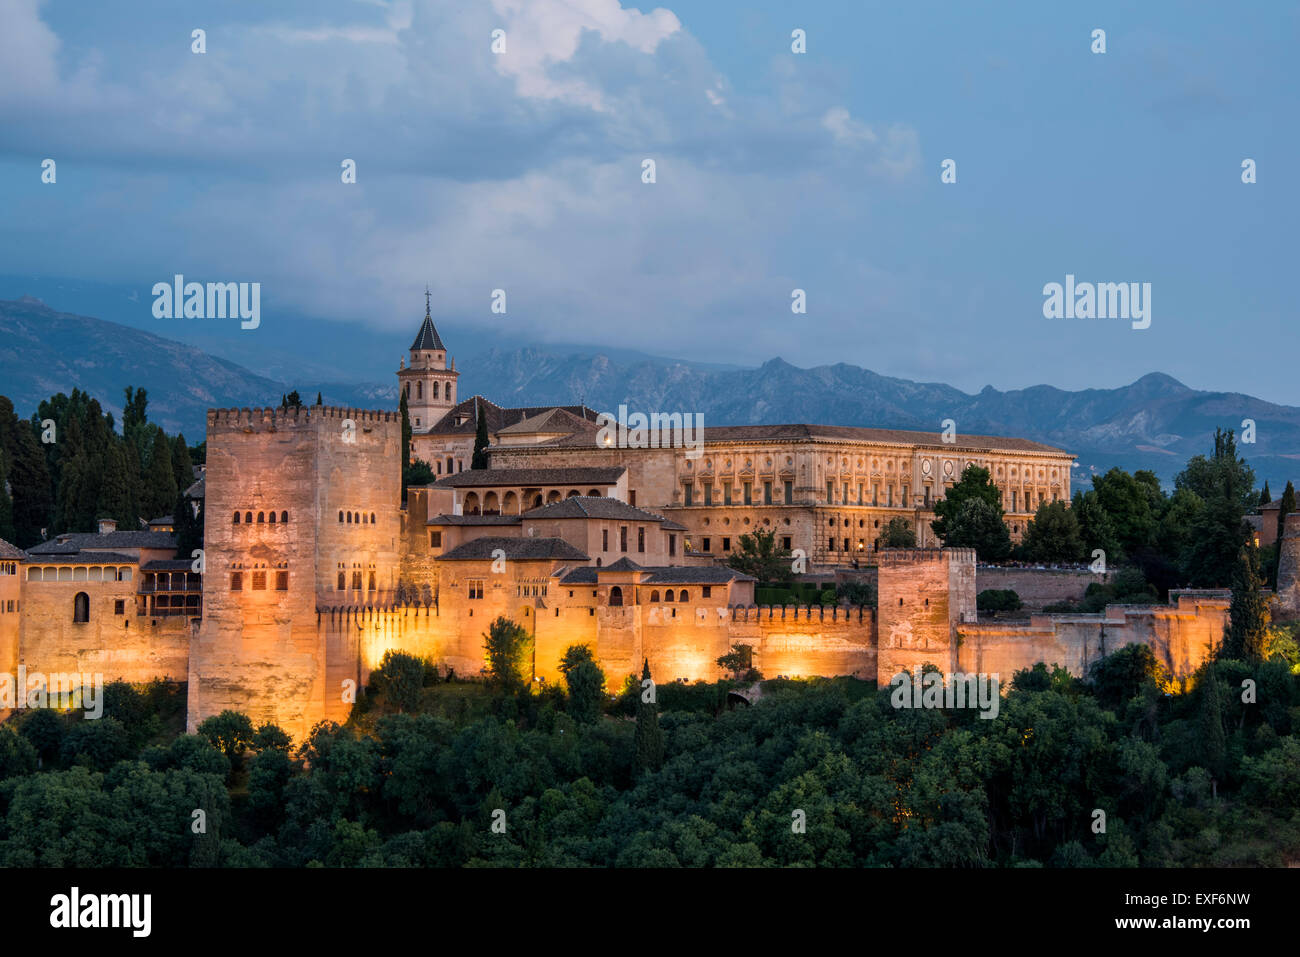 The Alhambra - Granada, Spain Stock Photo